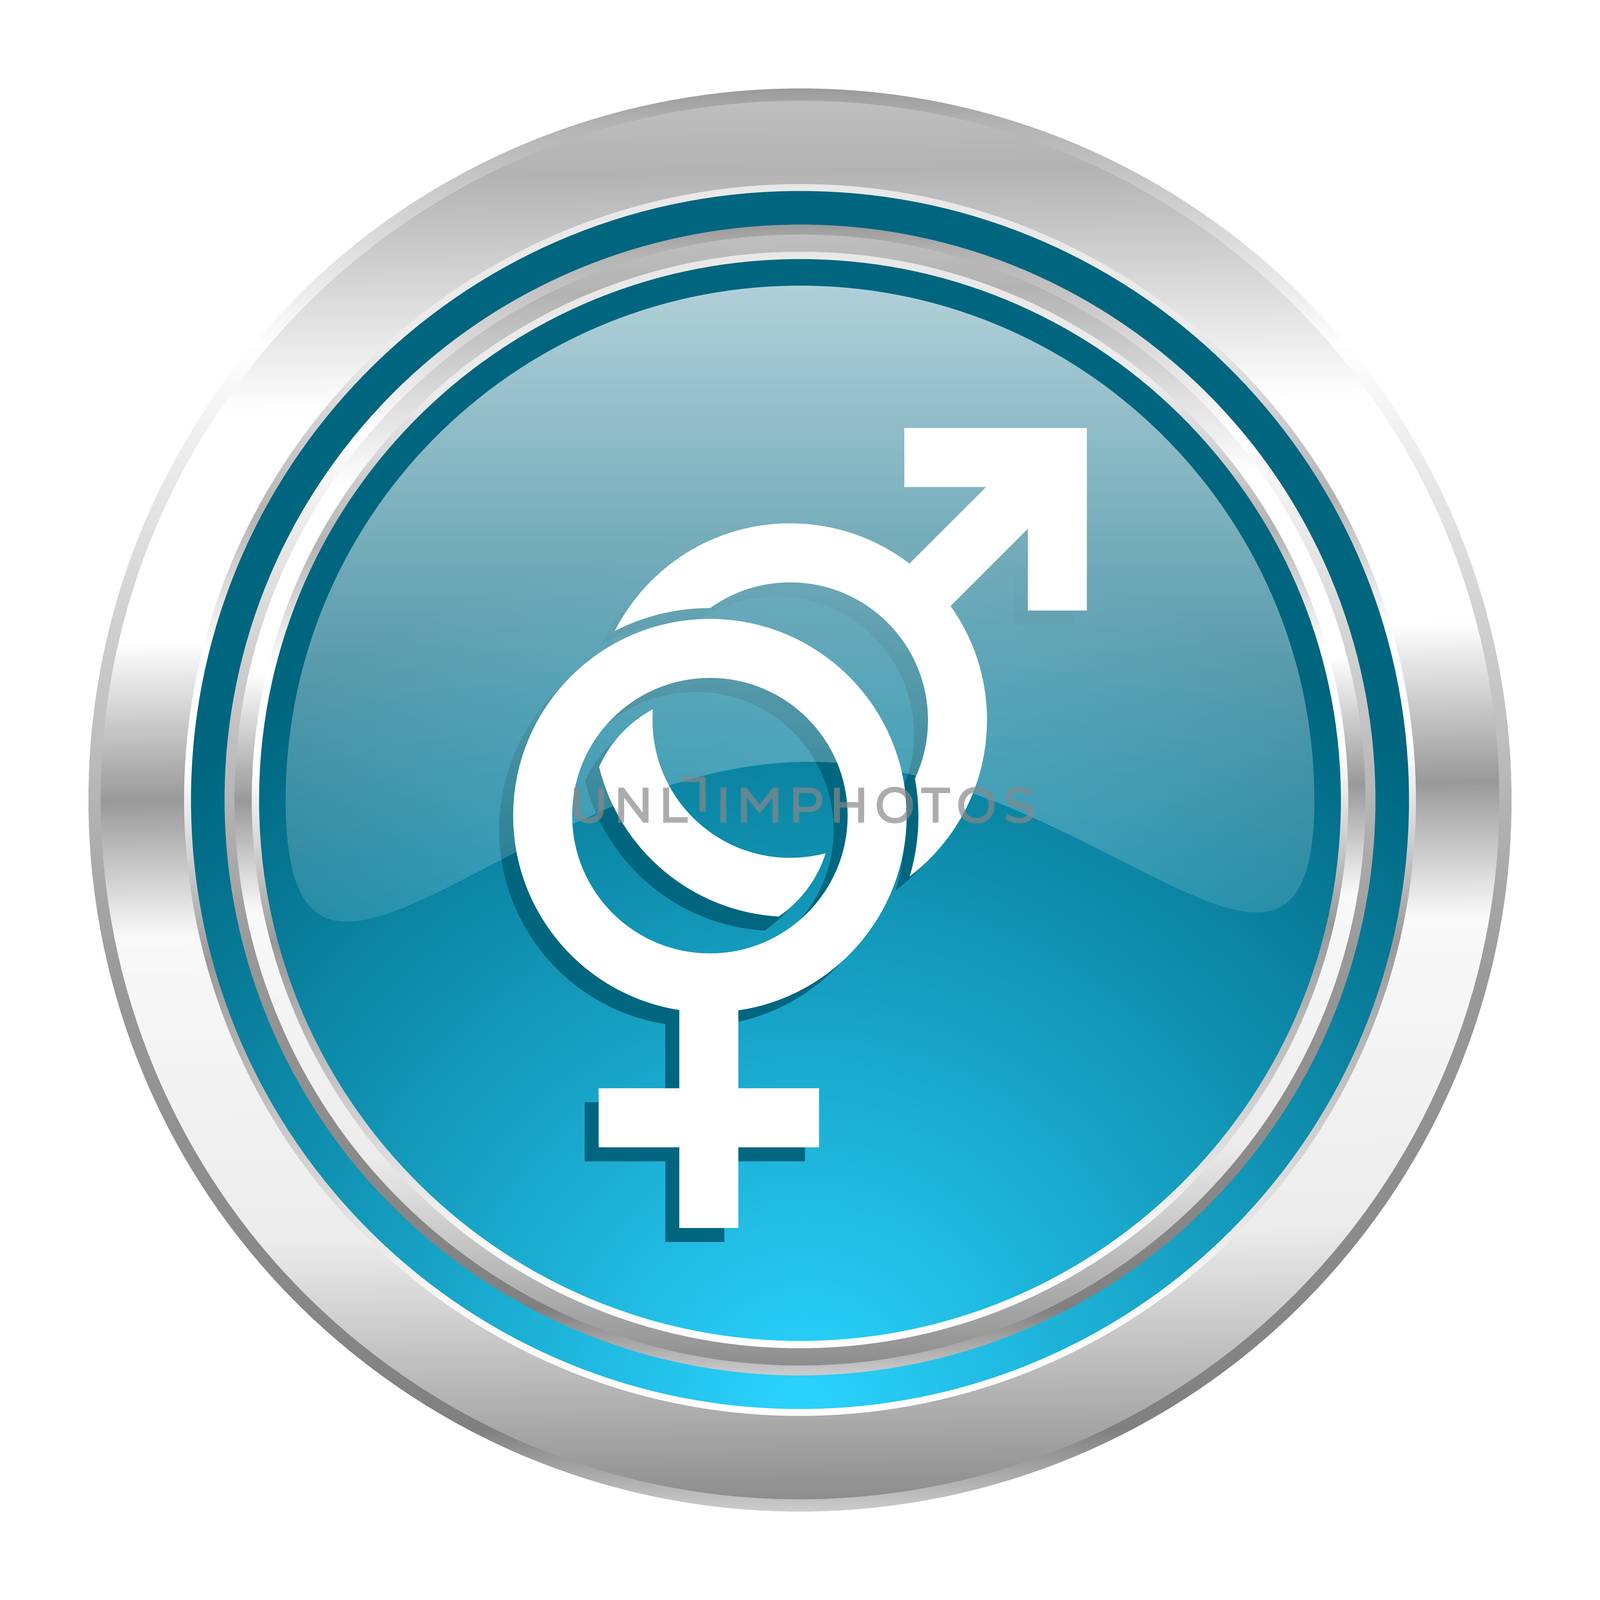 sex icon, gender sign